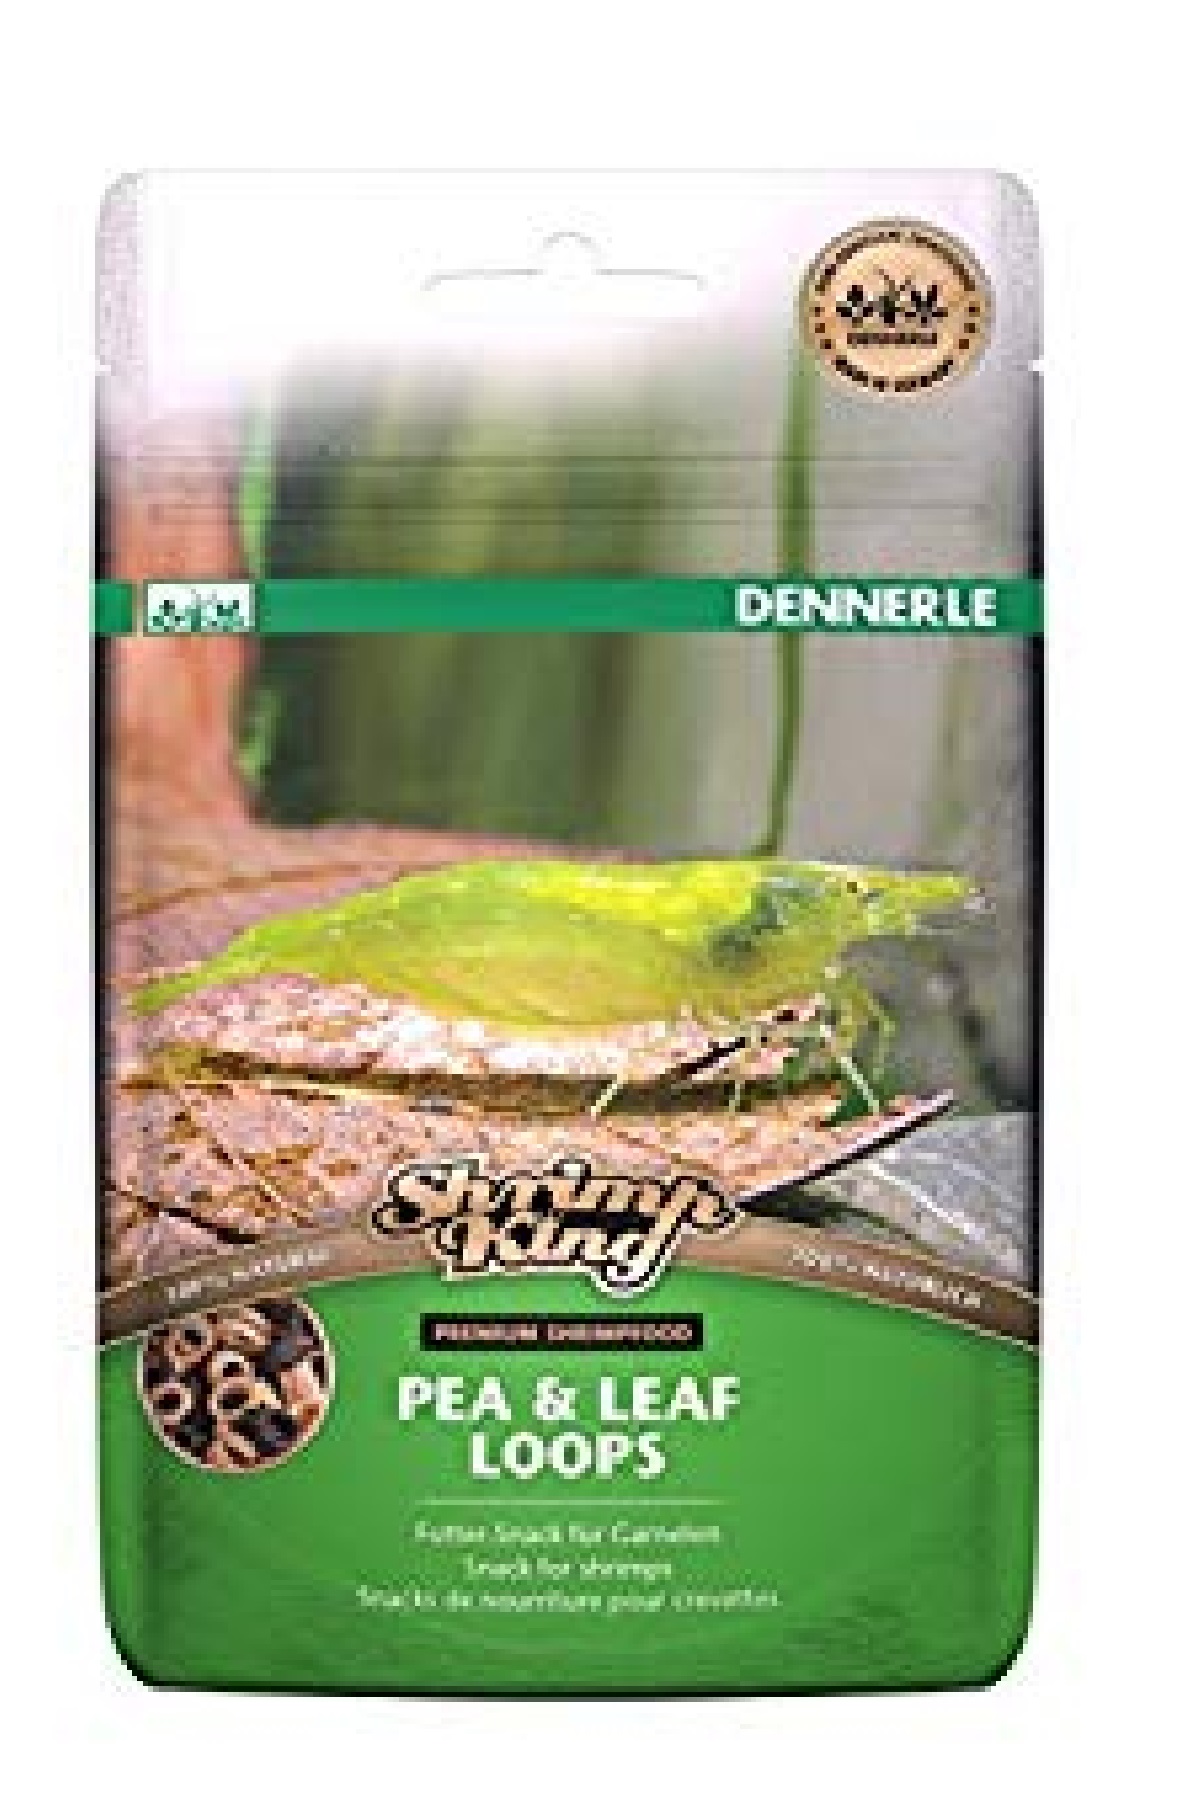 Dennerle Shrimp King Pea & Leaf Loops